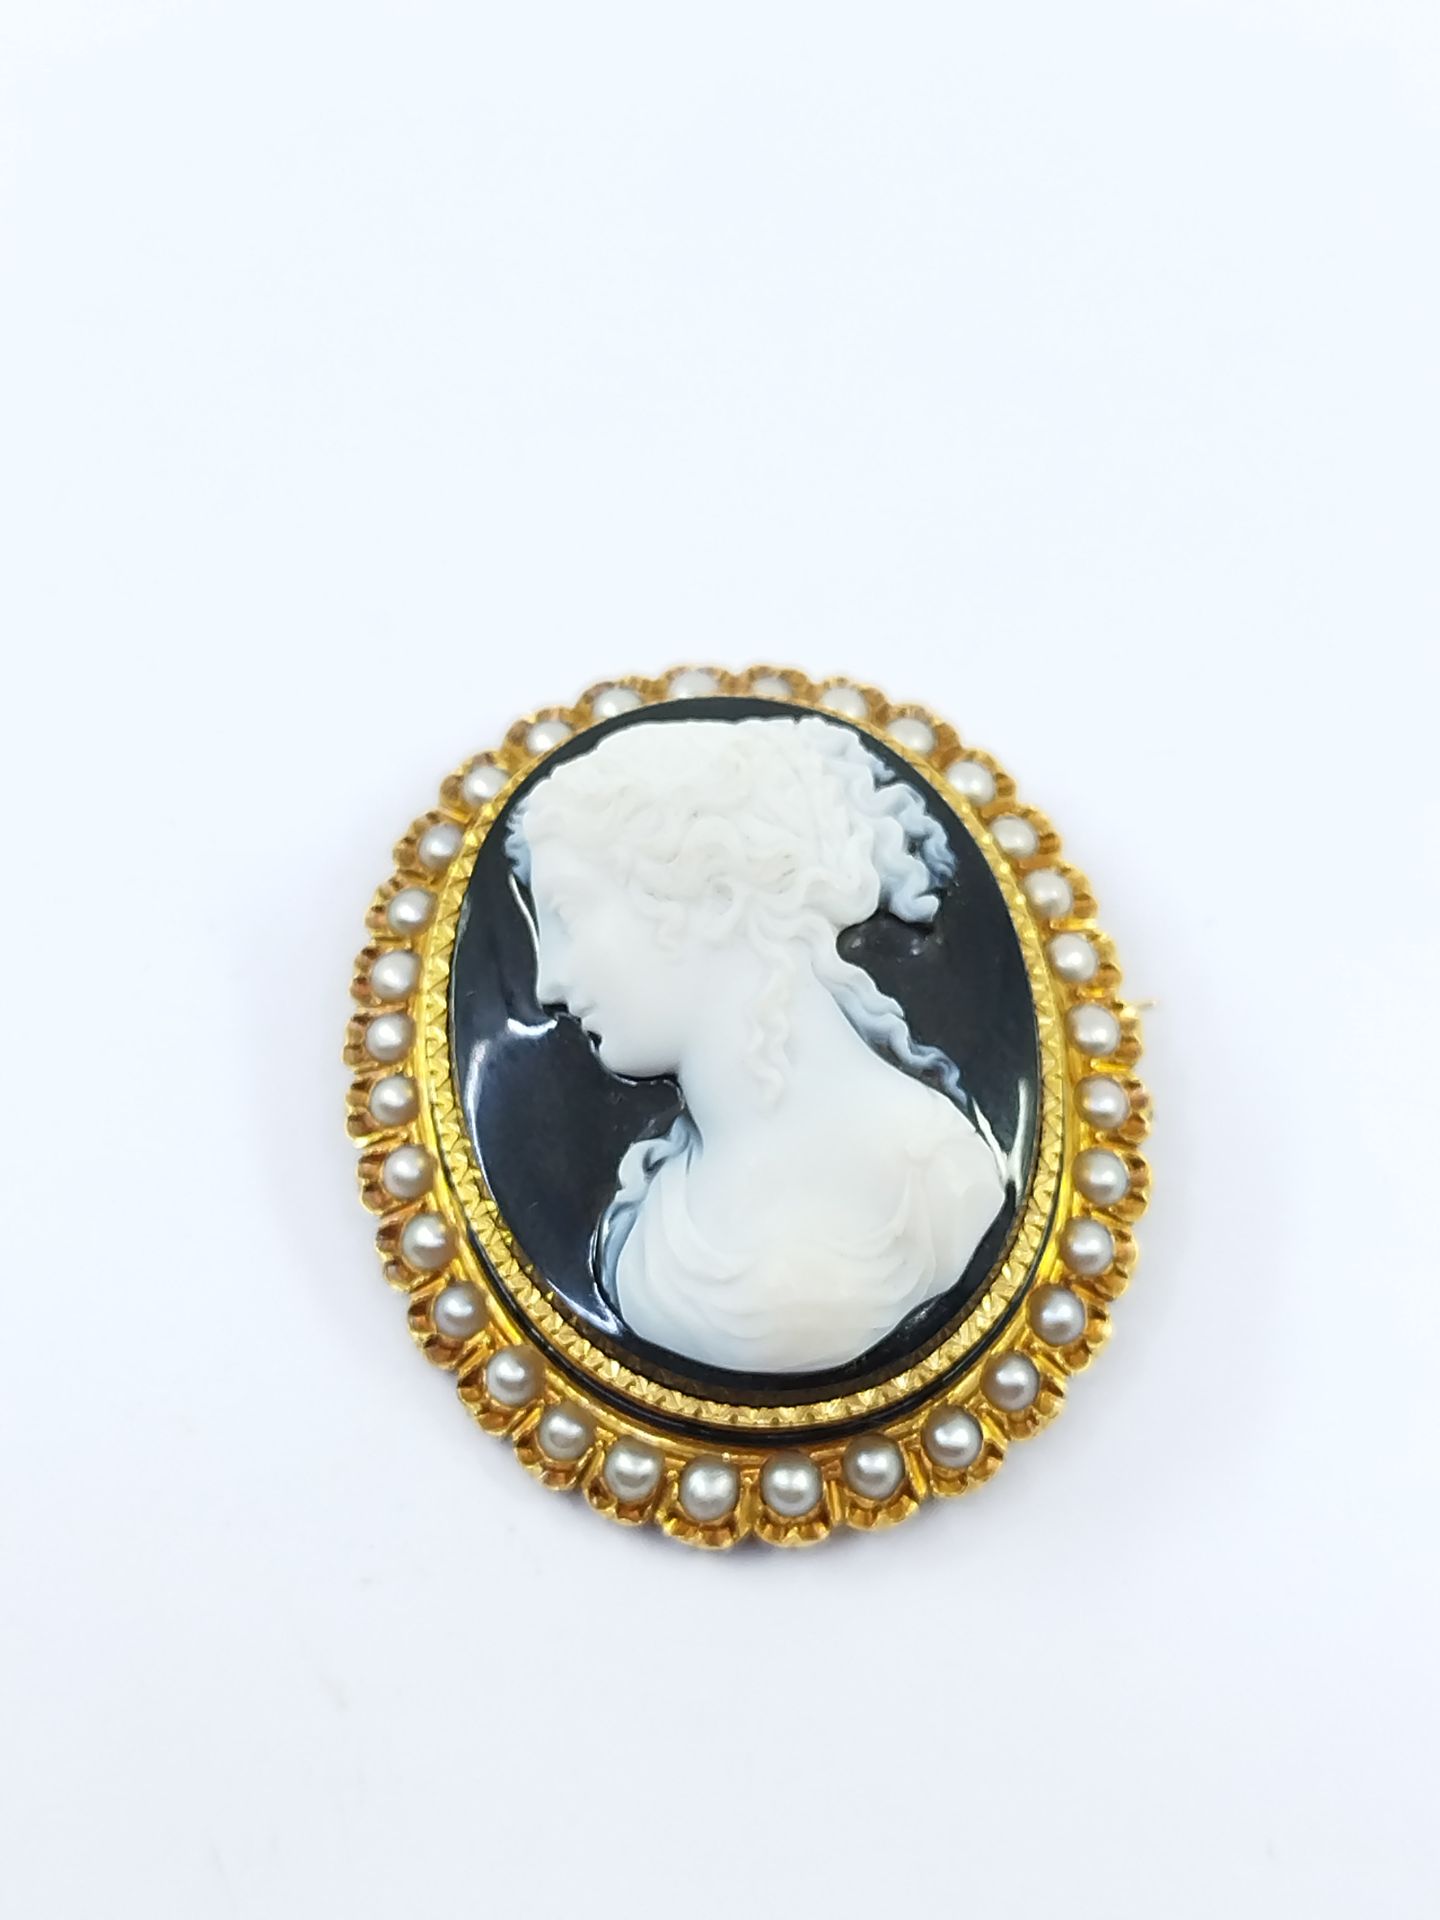 Null 法国的工作

缟玛瑙上的CAMEE，代表一位古时的女士形象，750°的黄金戒指，珐琅和珍珠可能是精品 

毛重 : 22,63 g